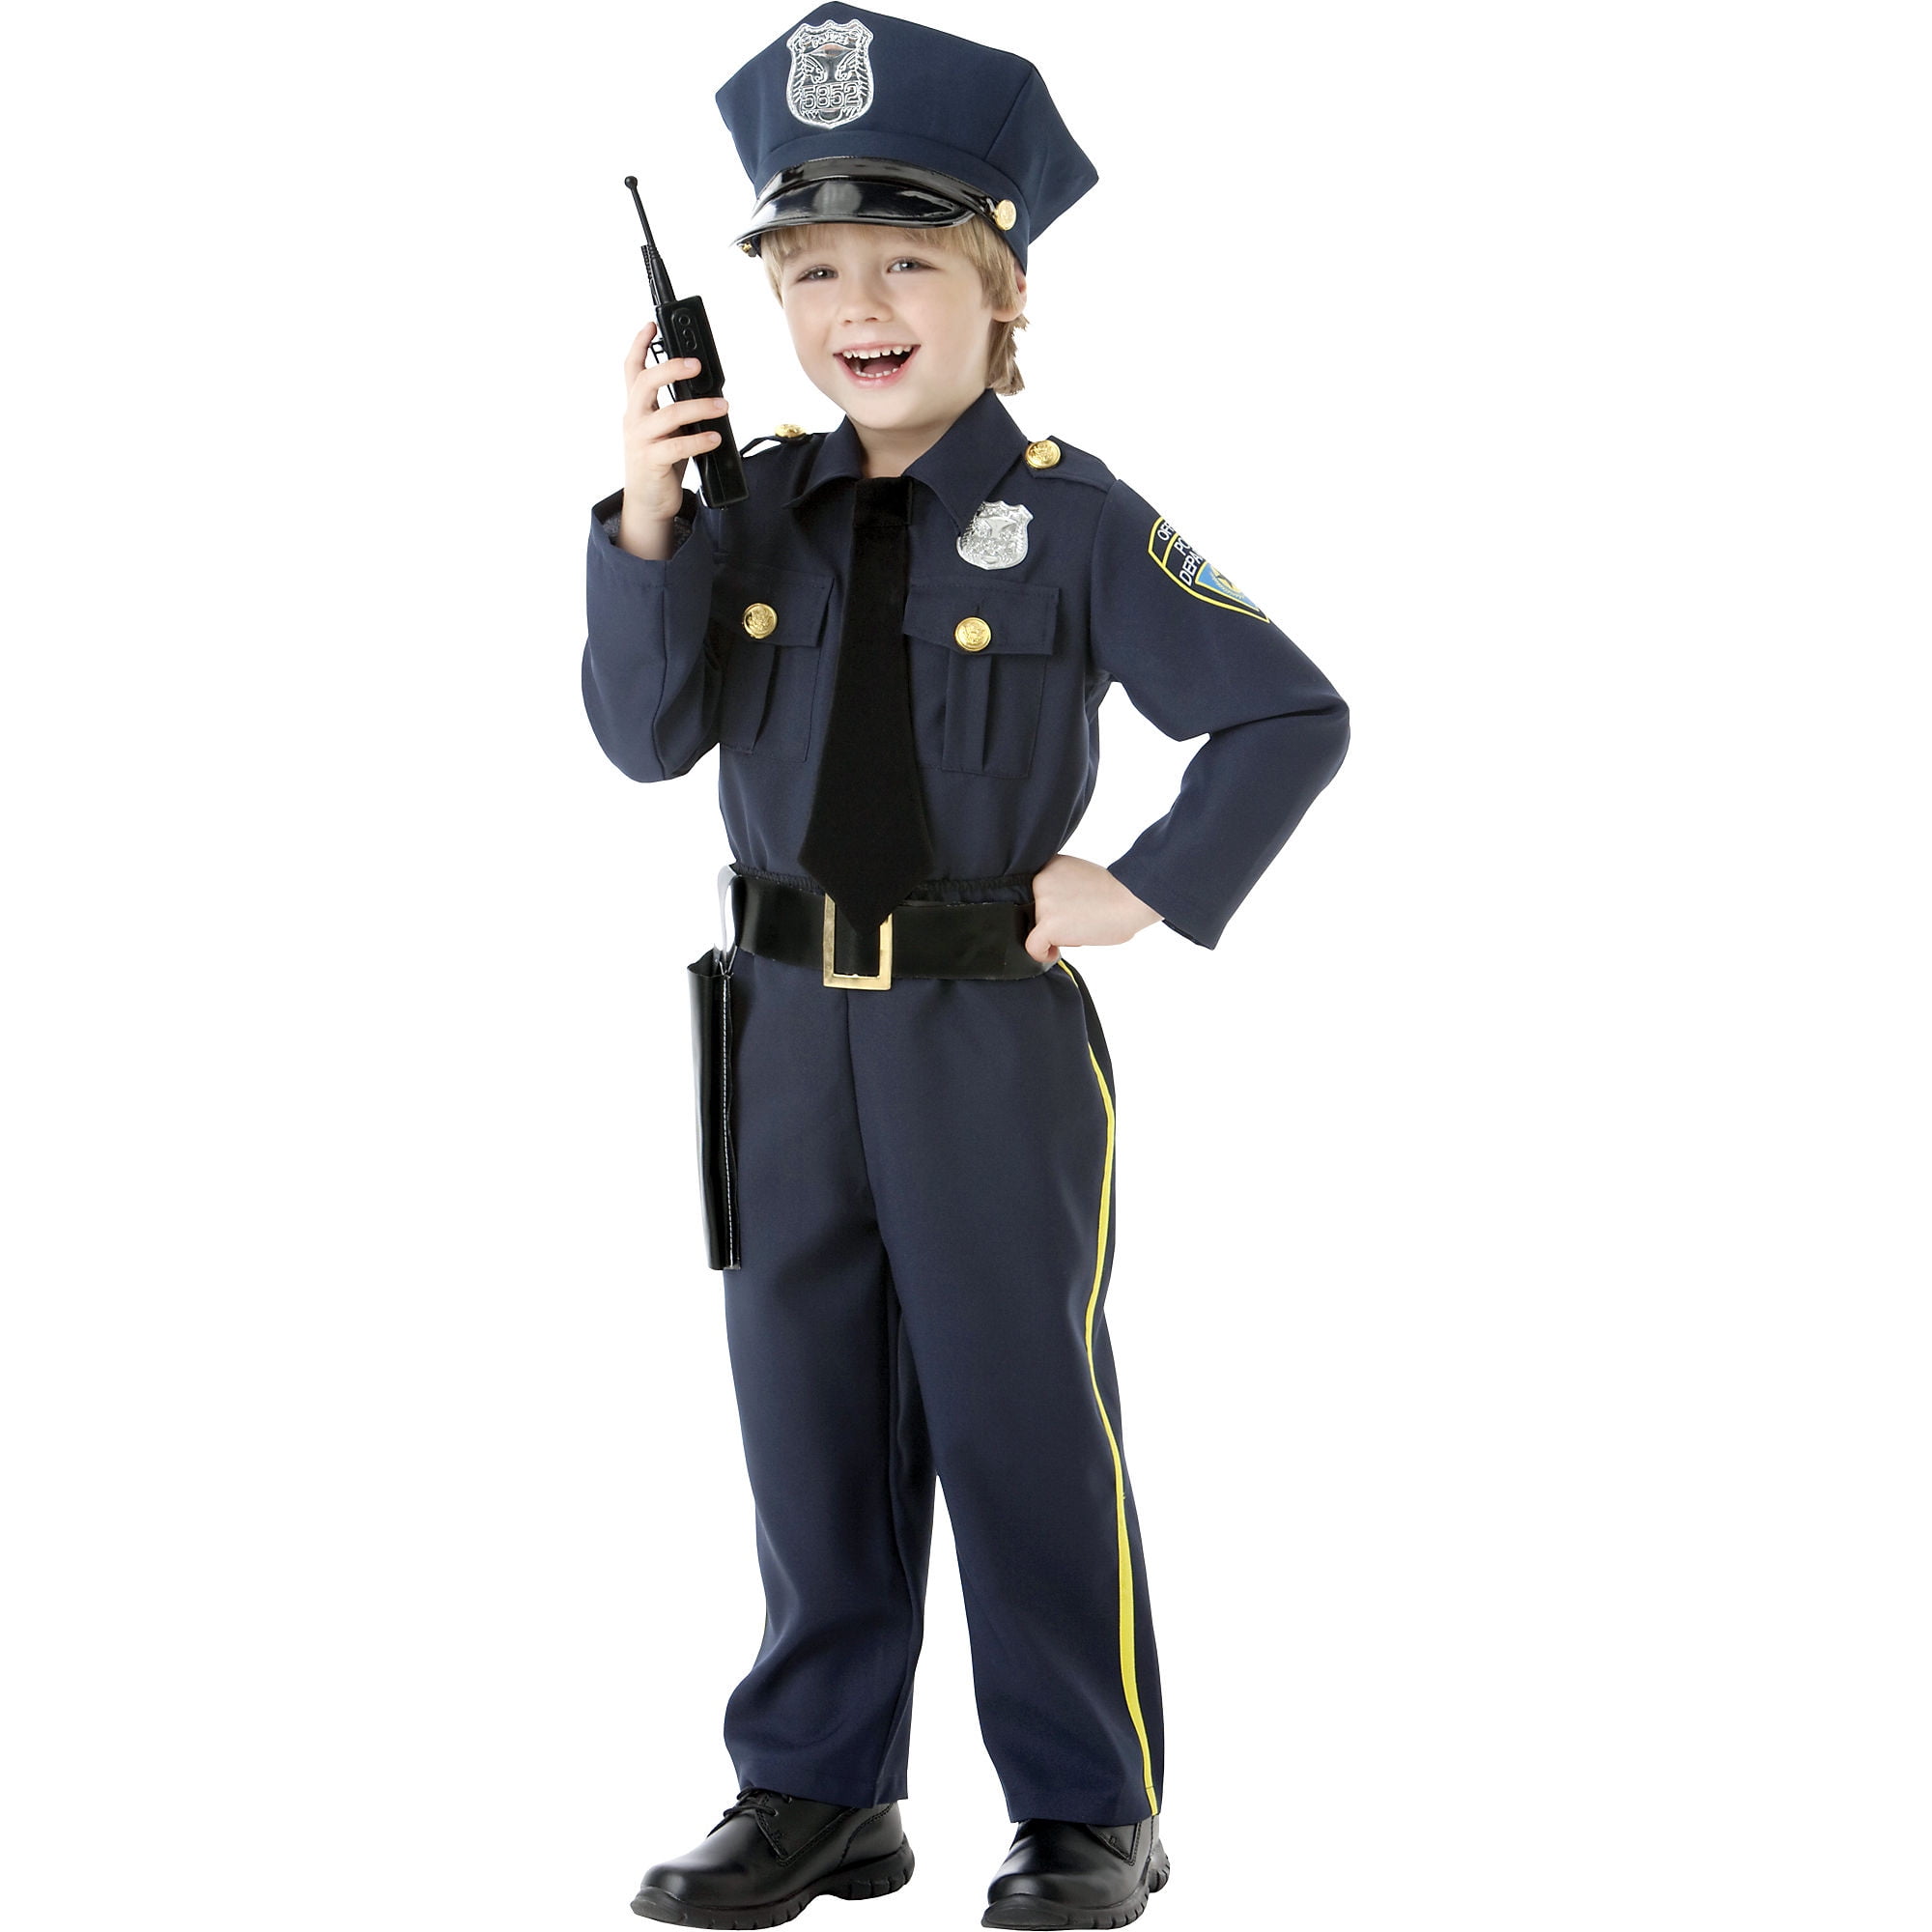 Police Officer 5 Piece Costume Set Kids Size Toddler 3-4 Halloween 841181 for sale online 